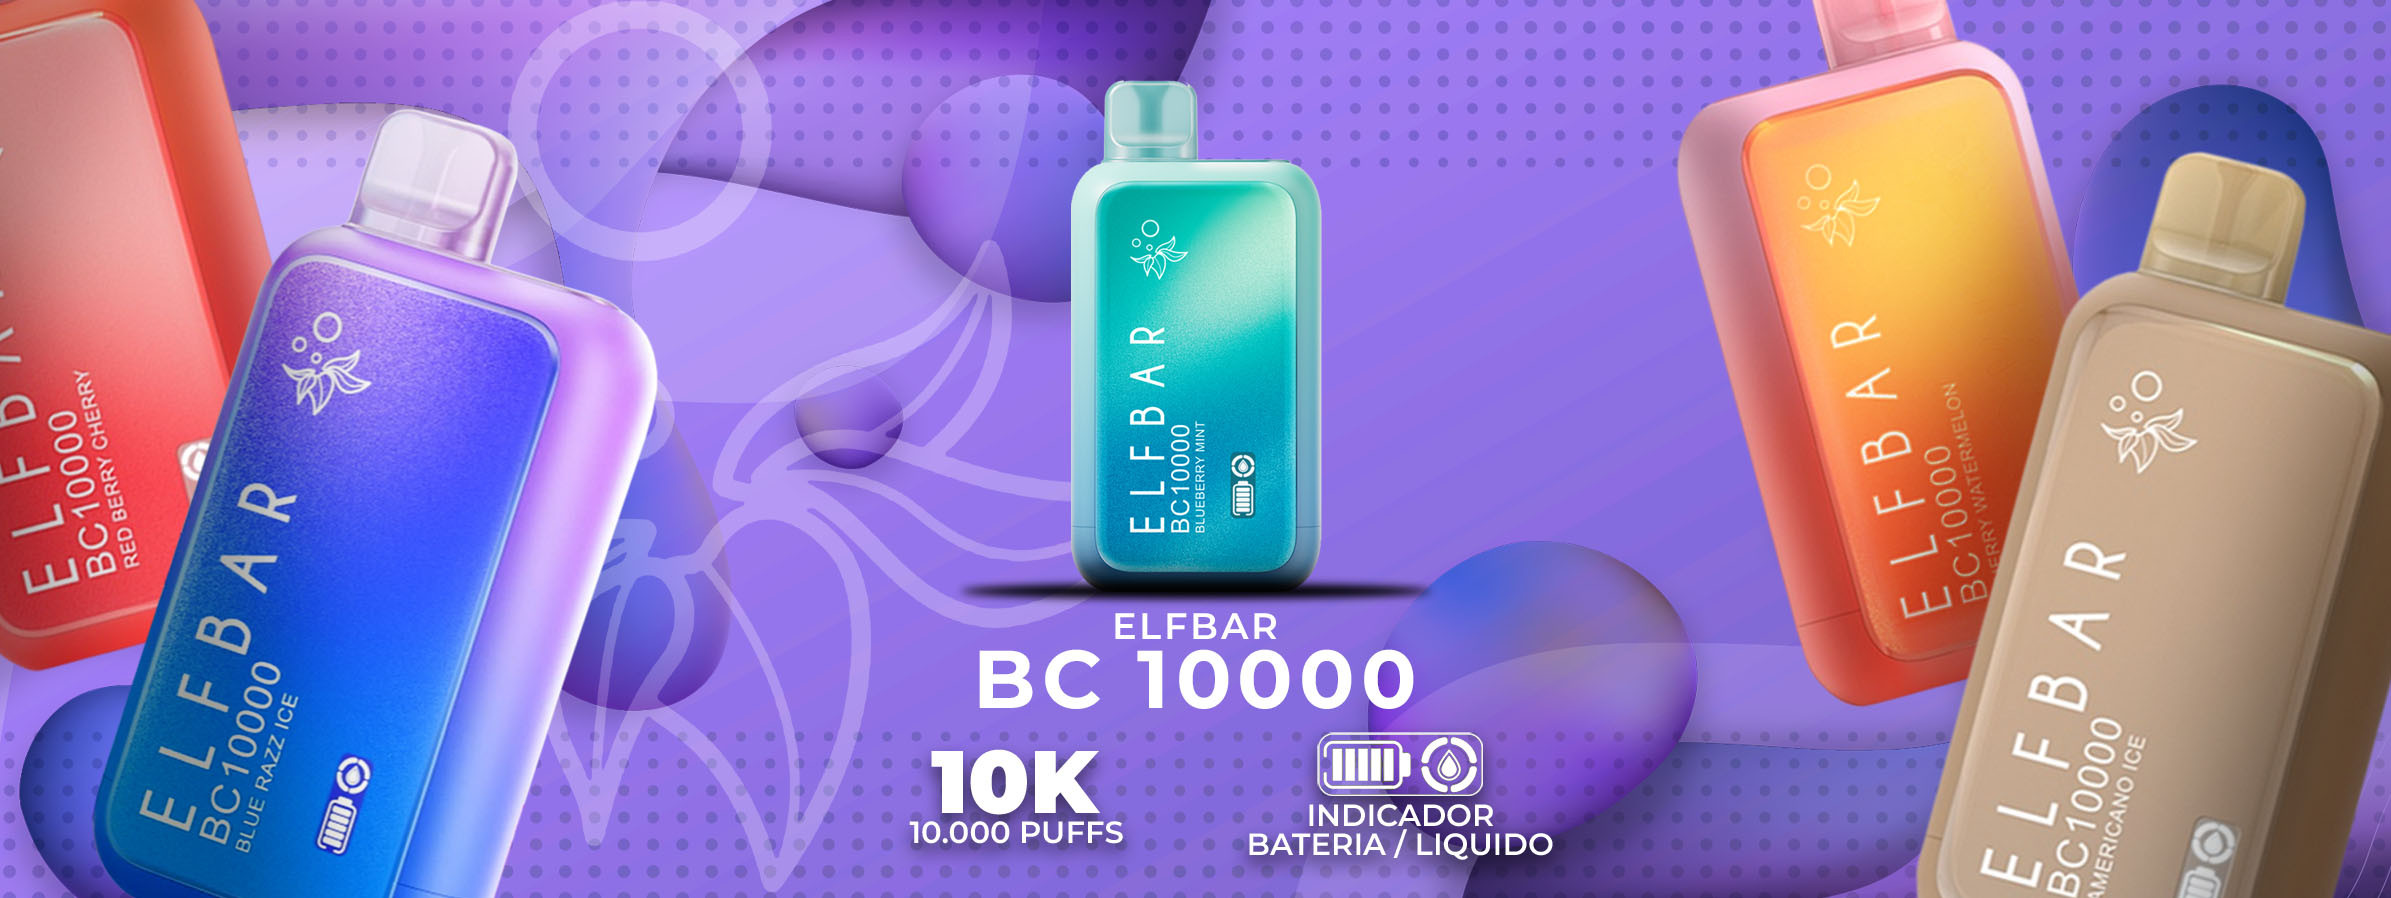 ELFBAR BC10000.